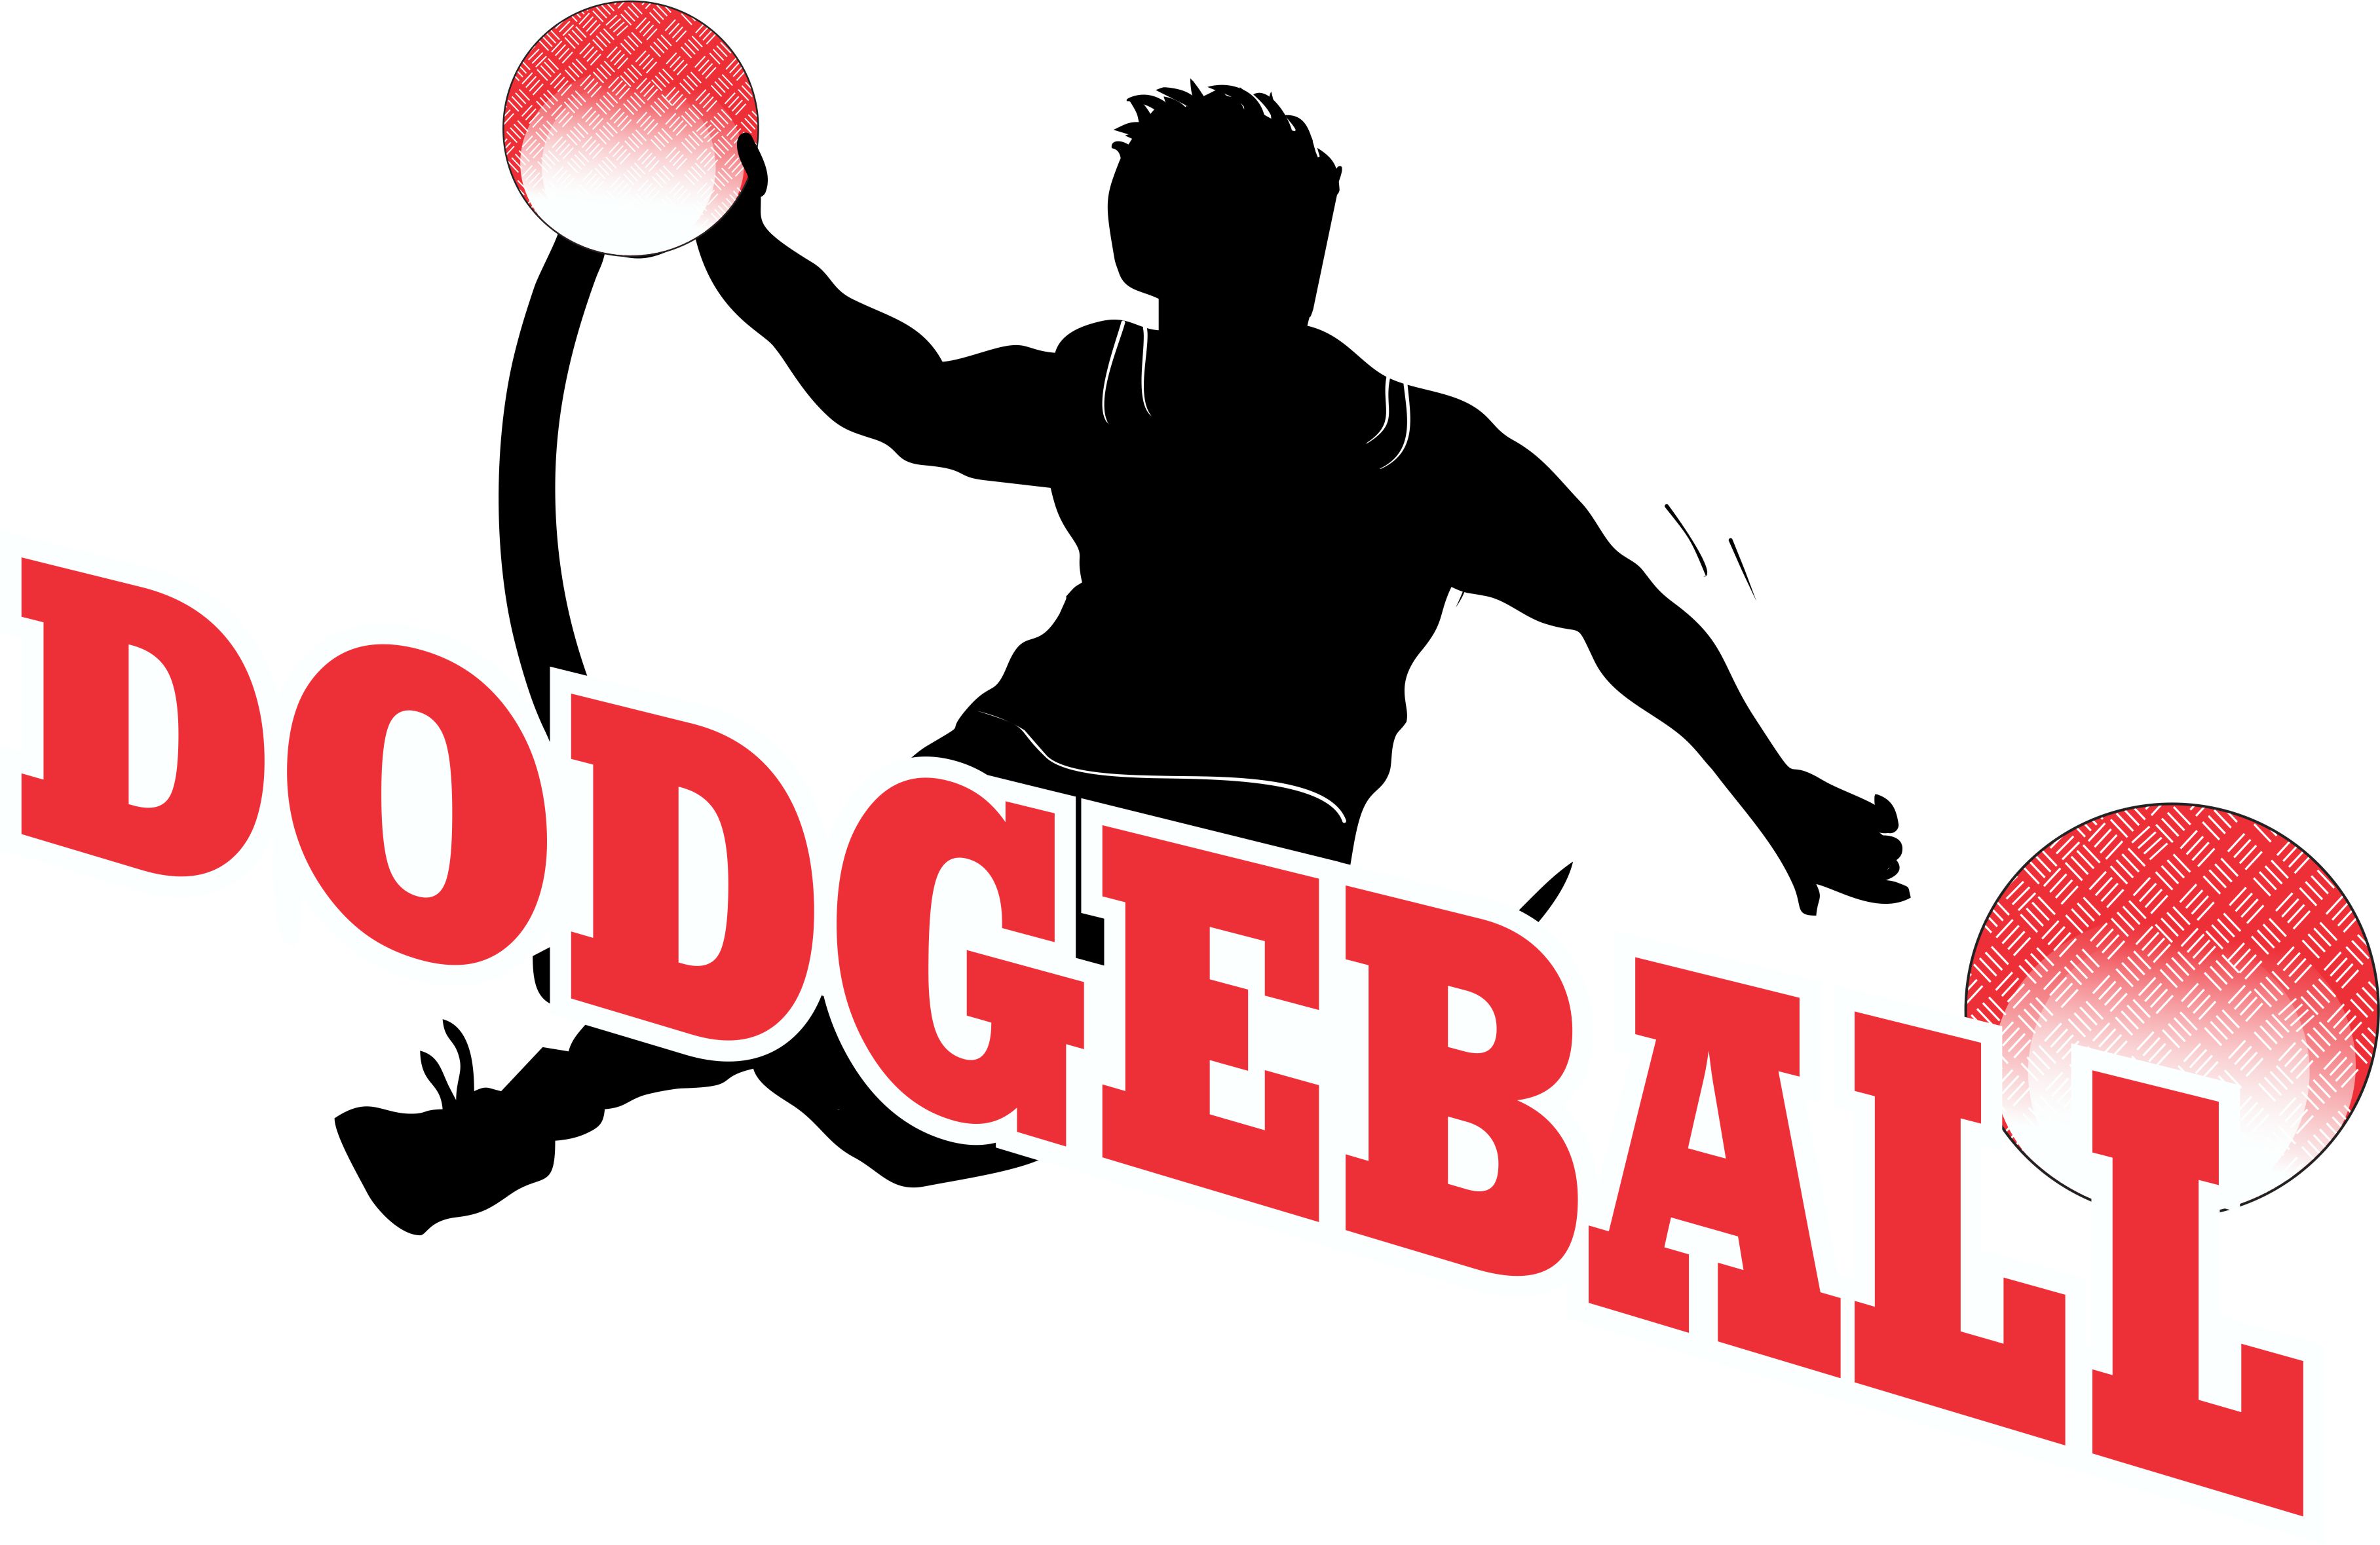 Dodgeball Roster Download Official Dodgeball Rules Download